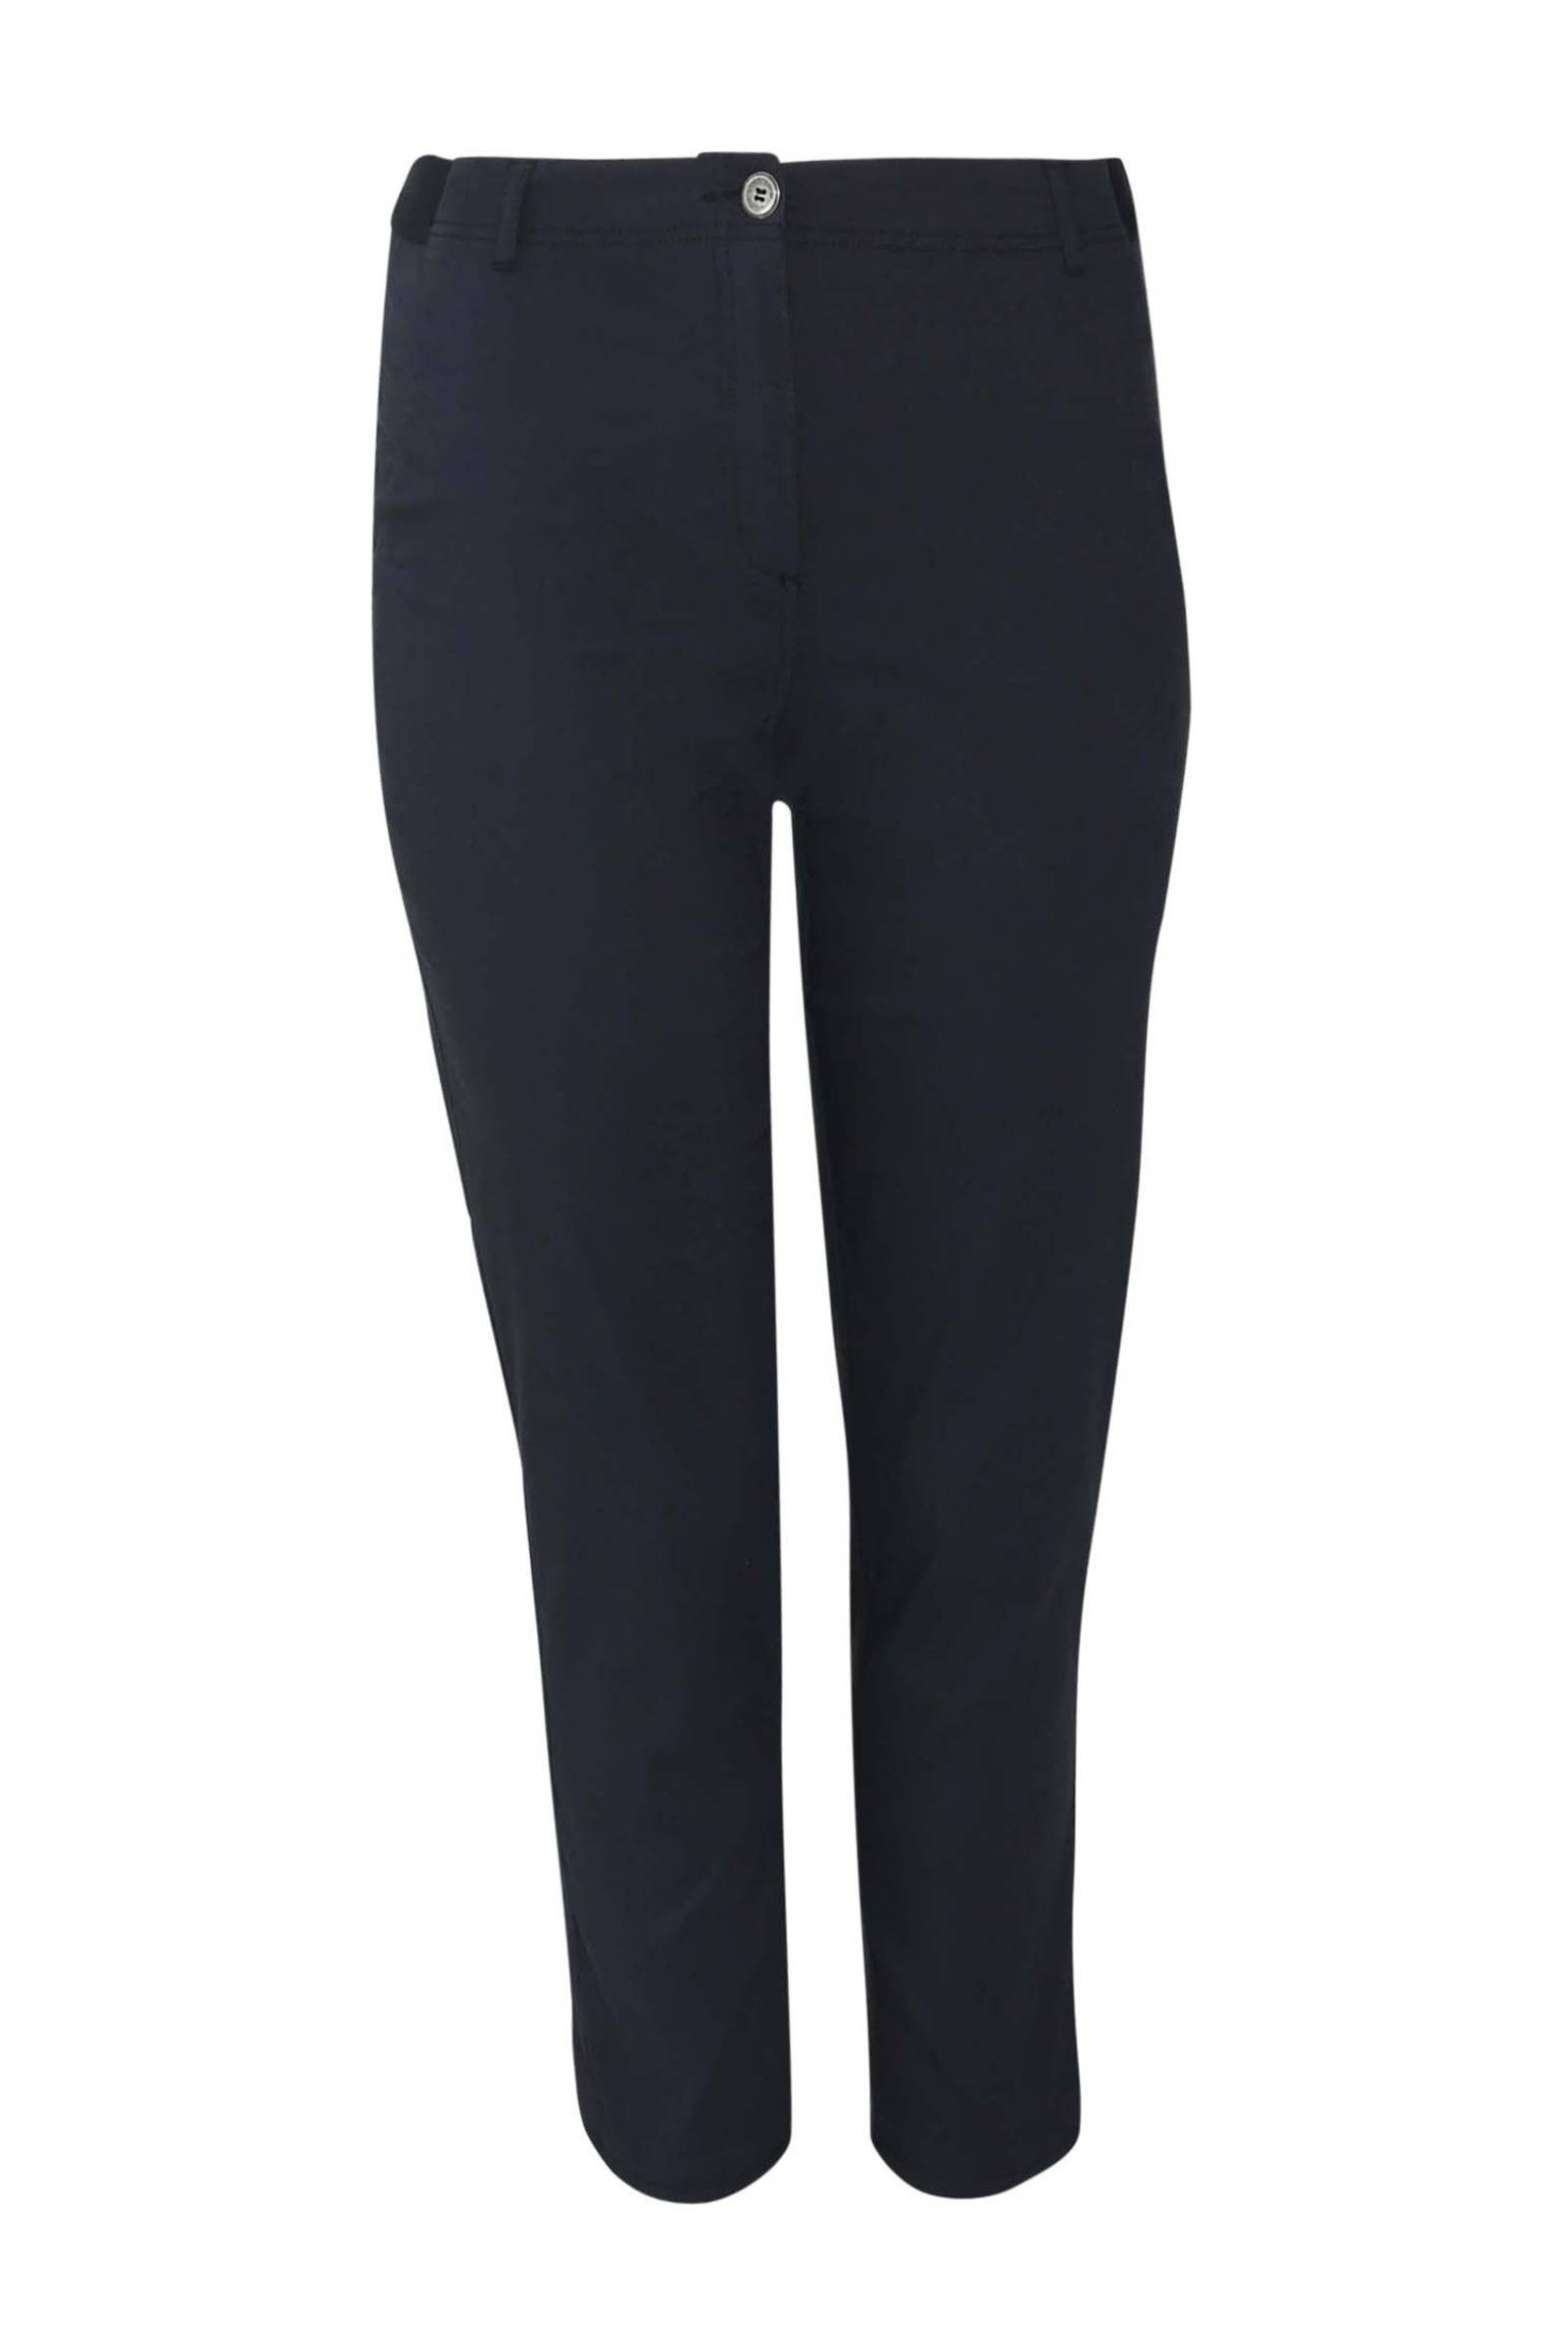 Paprika cropped slim fit broek donkerblauw online kopen